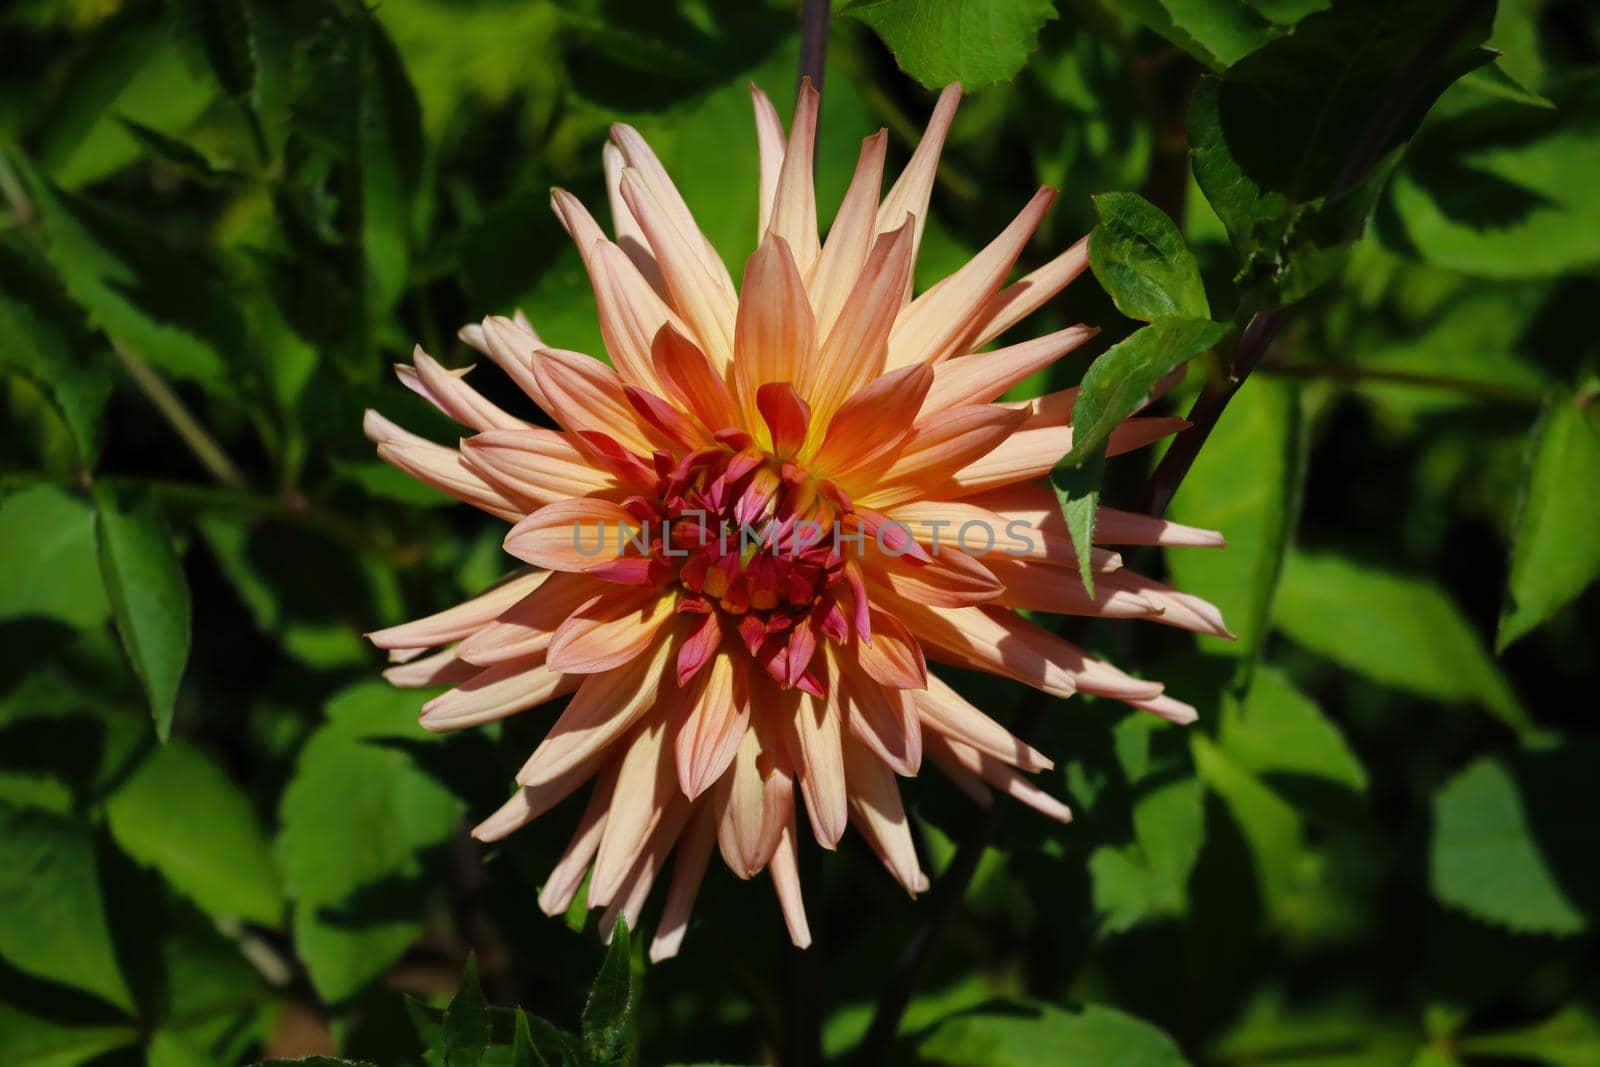 Bud Dahlia flower close up in the garden. by kip02kas